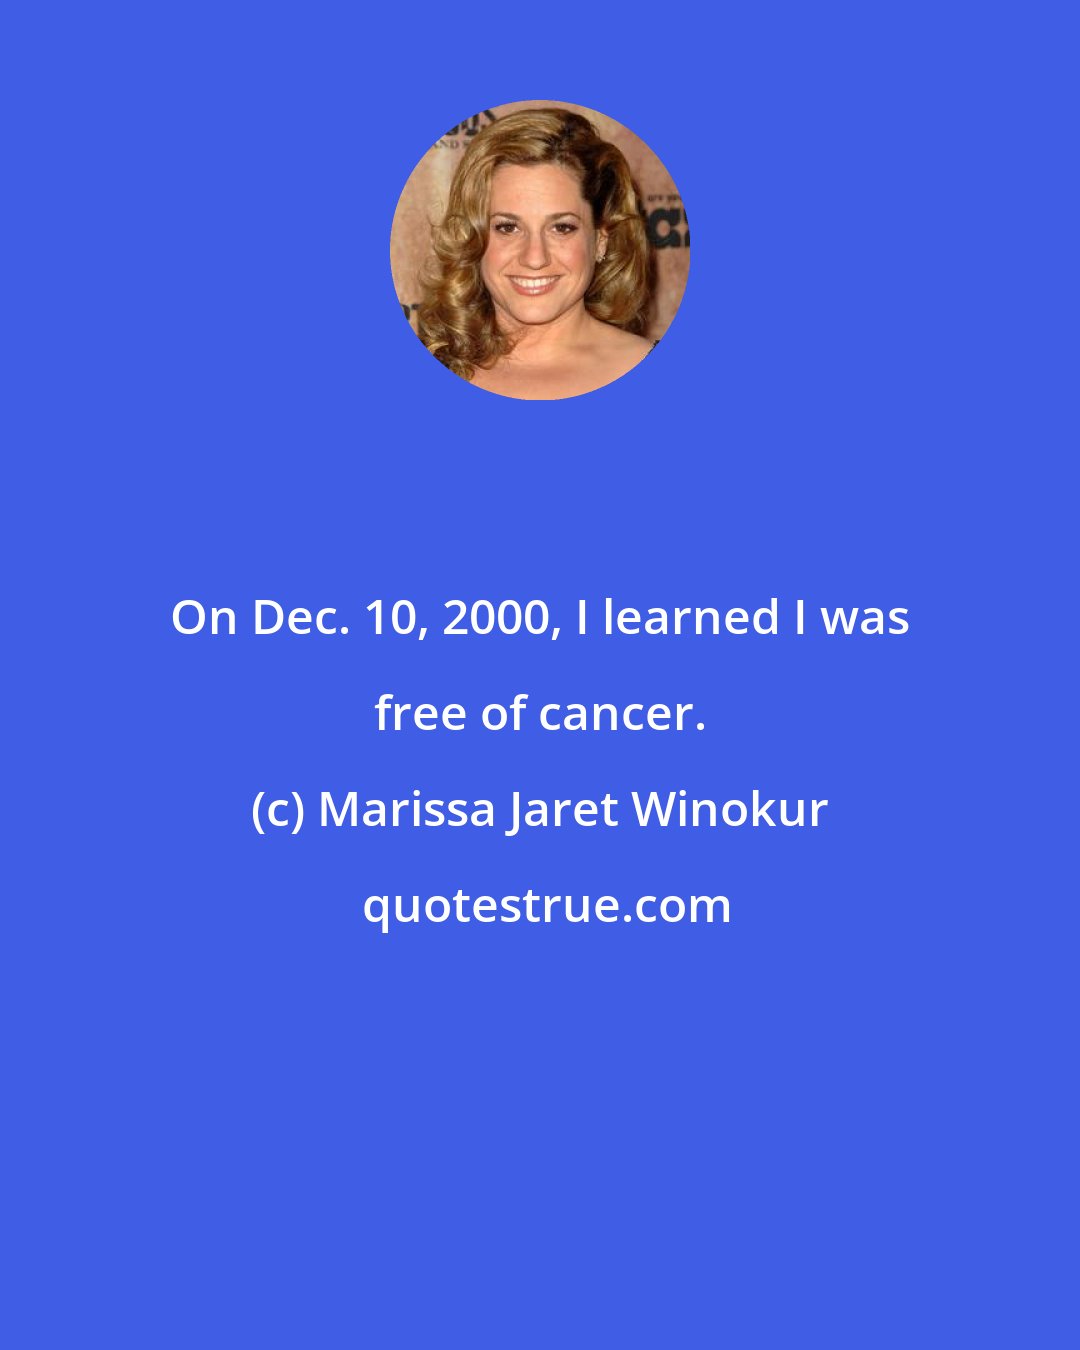 Marissa Jaret Winokur: On Dec. 10, 2000, I learned I was free of cancer.